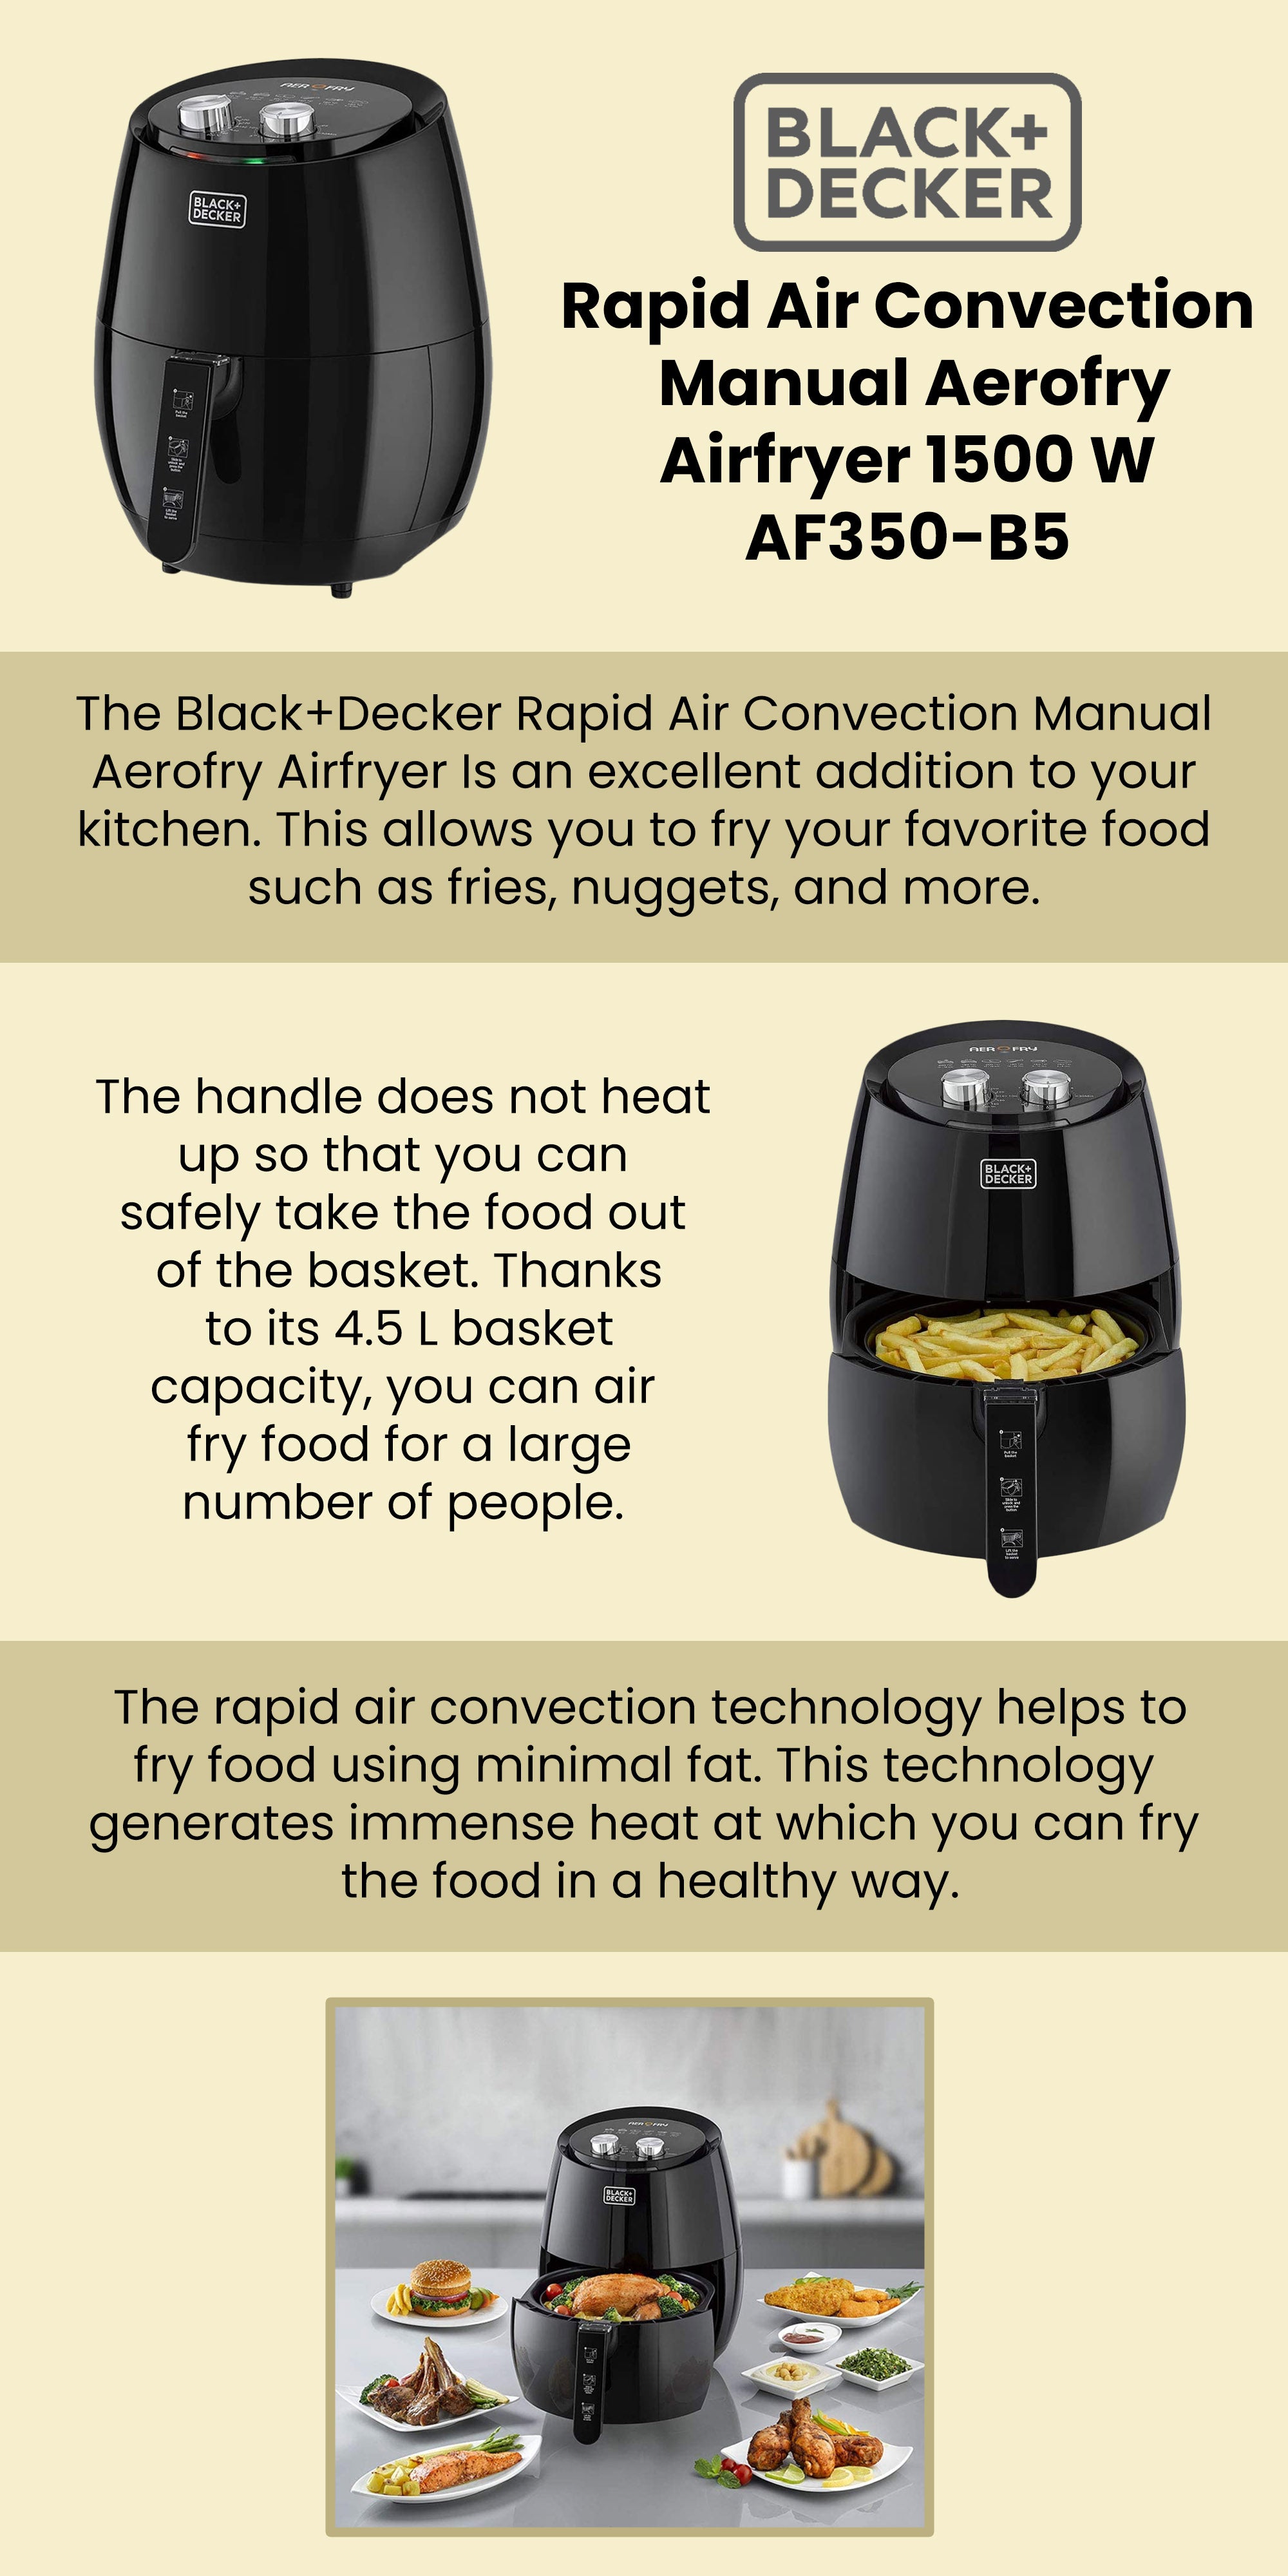 BLACK+DECKER Digital Air Fryer, 5 Liter, 1500 Watt, Black - AF550